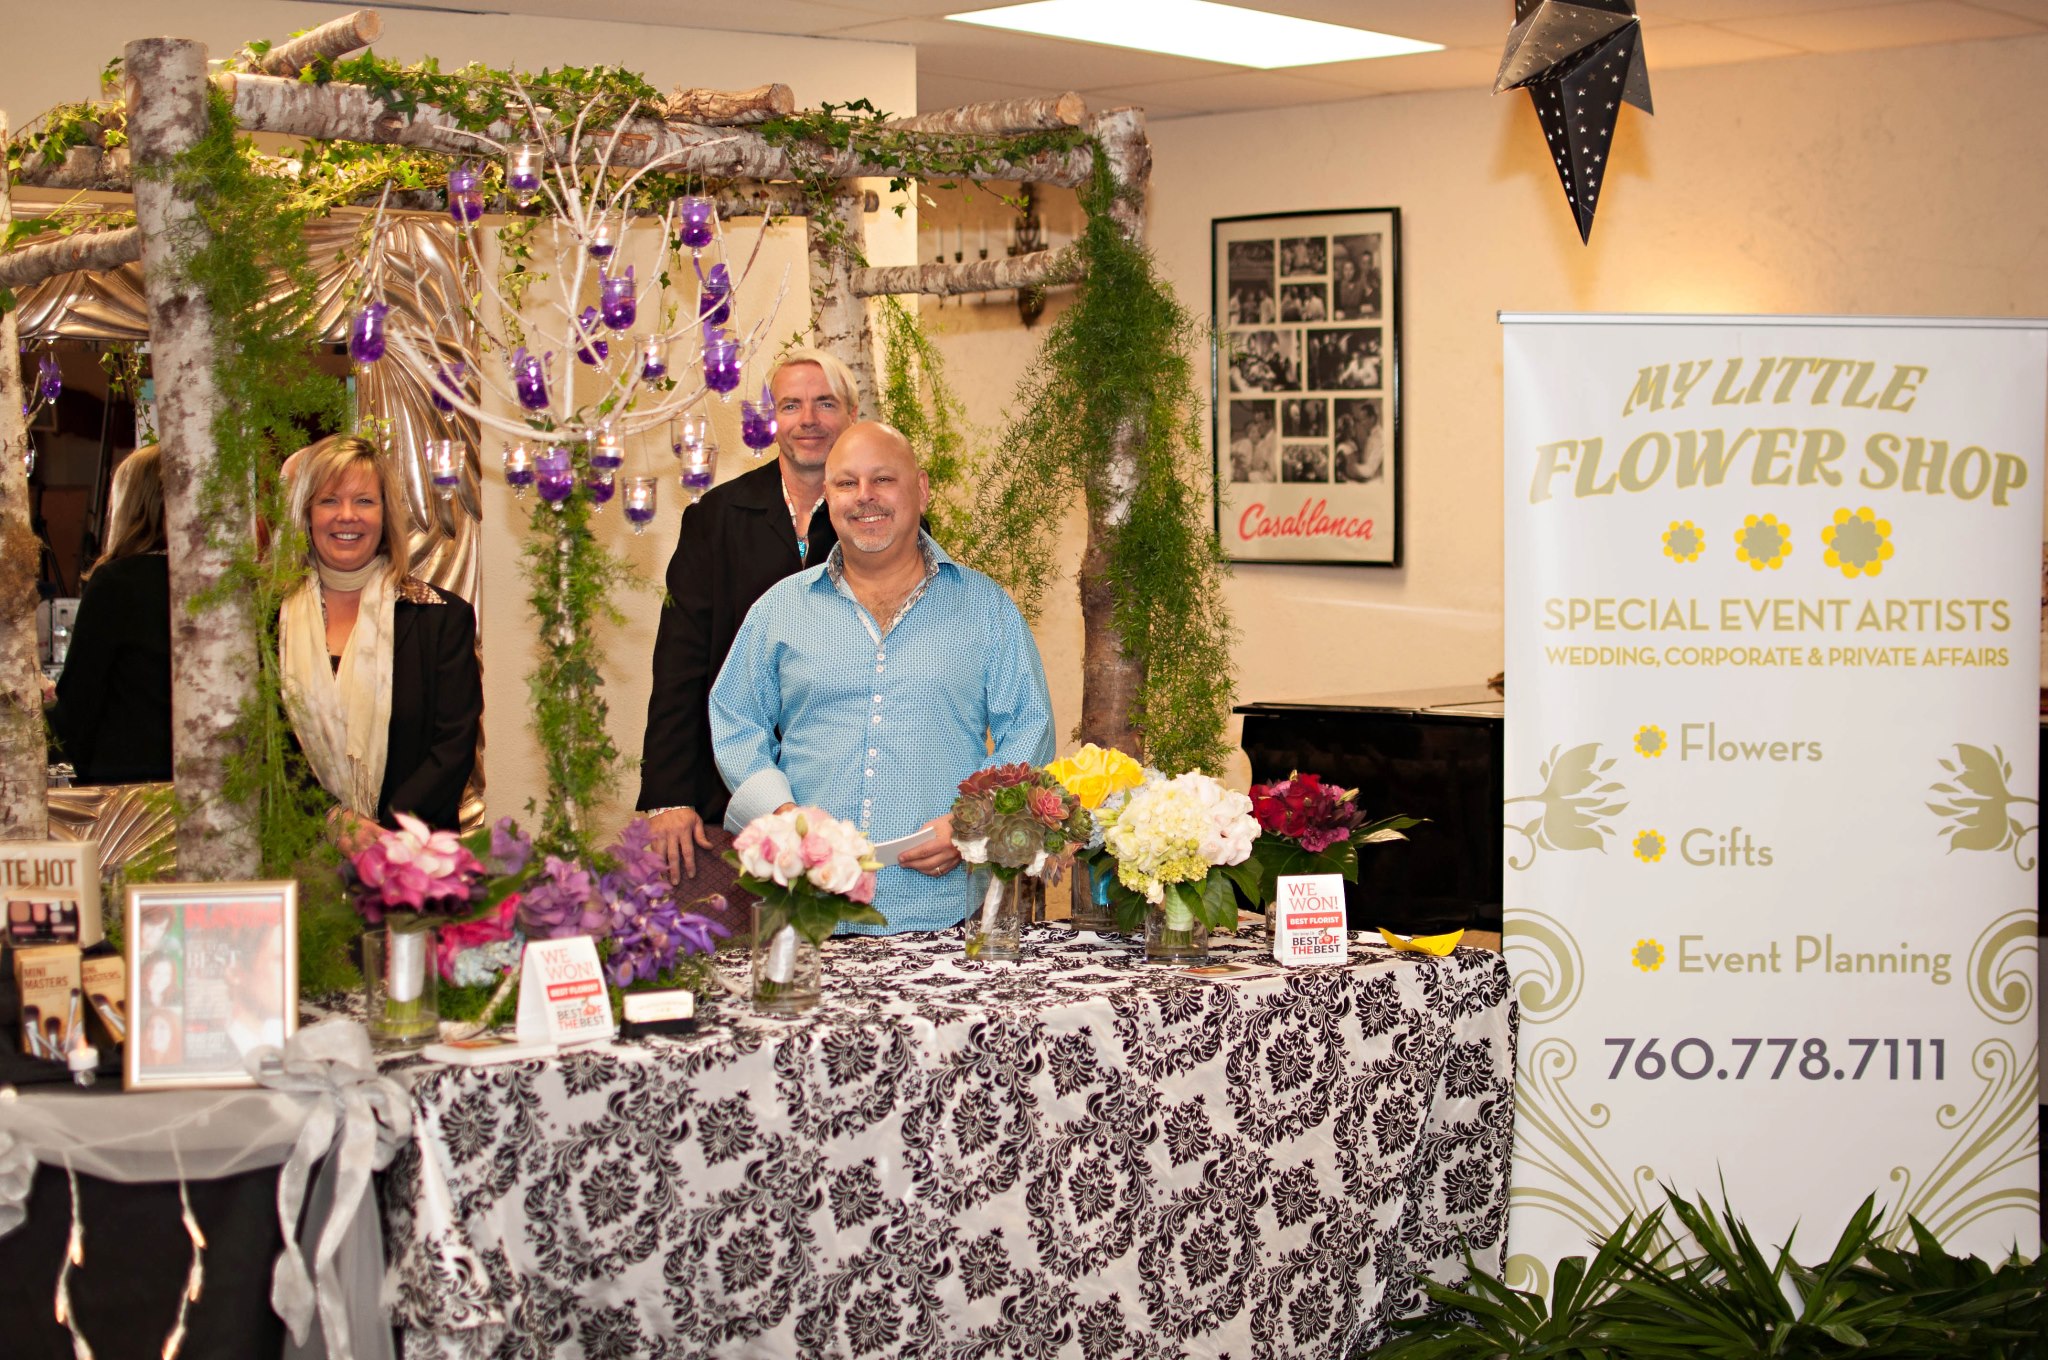 The My Little Flower Shop team shows off bouquets & centerpieces at a Bridal Show